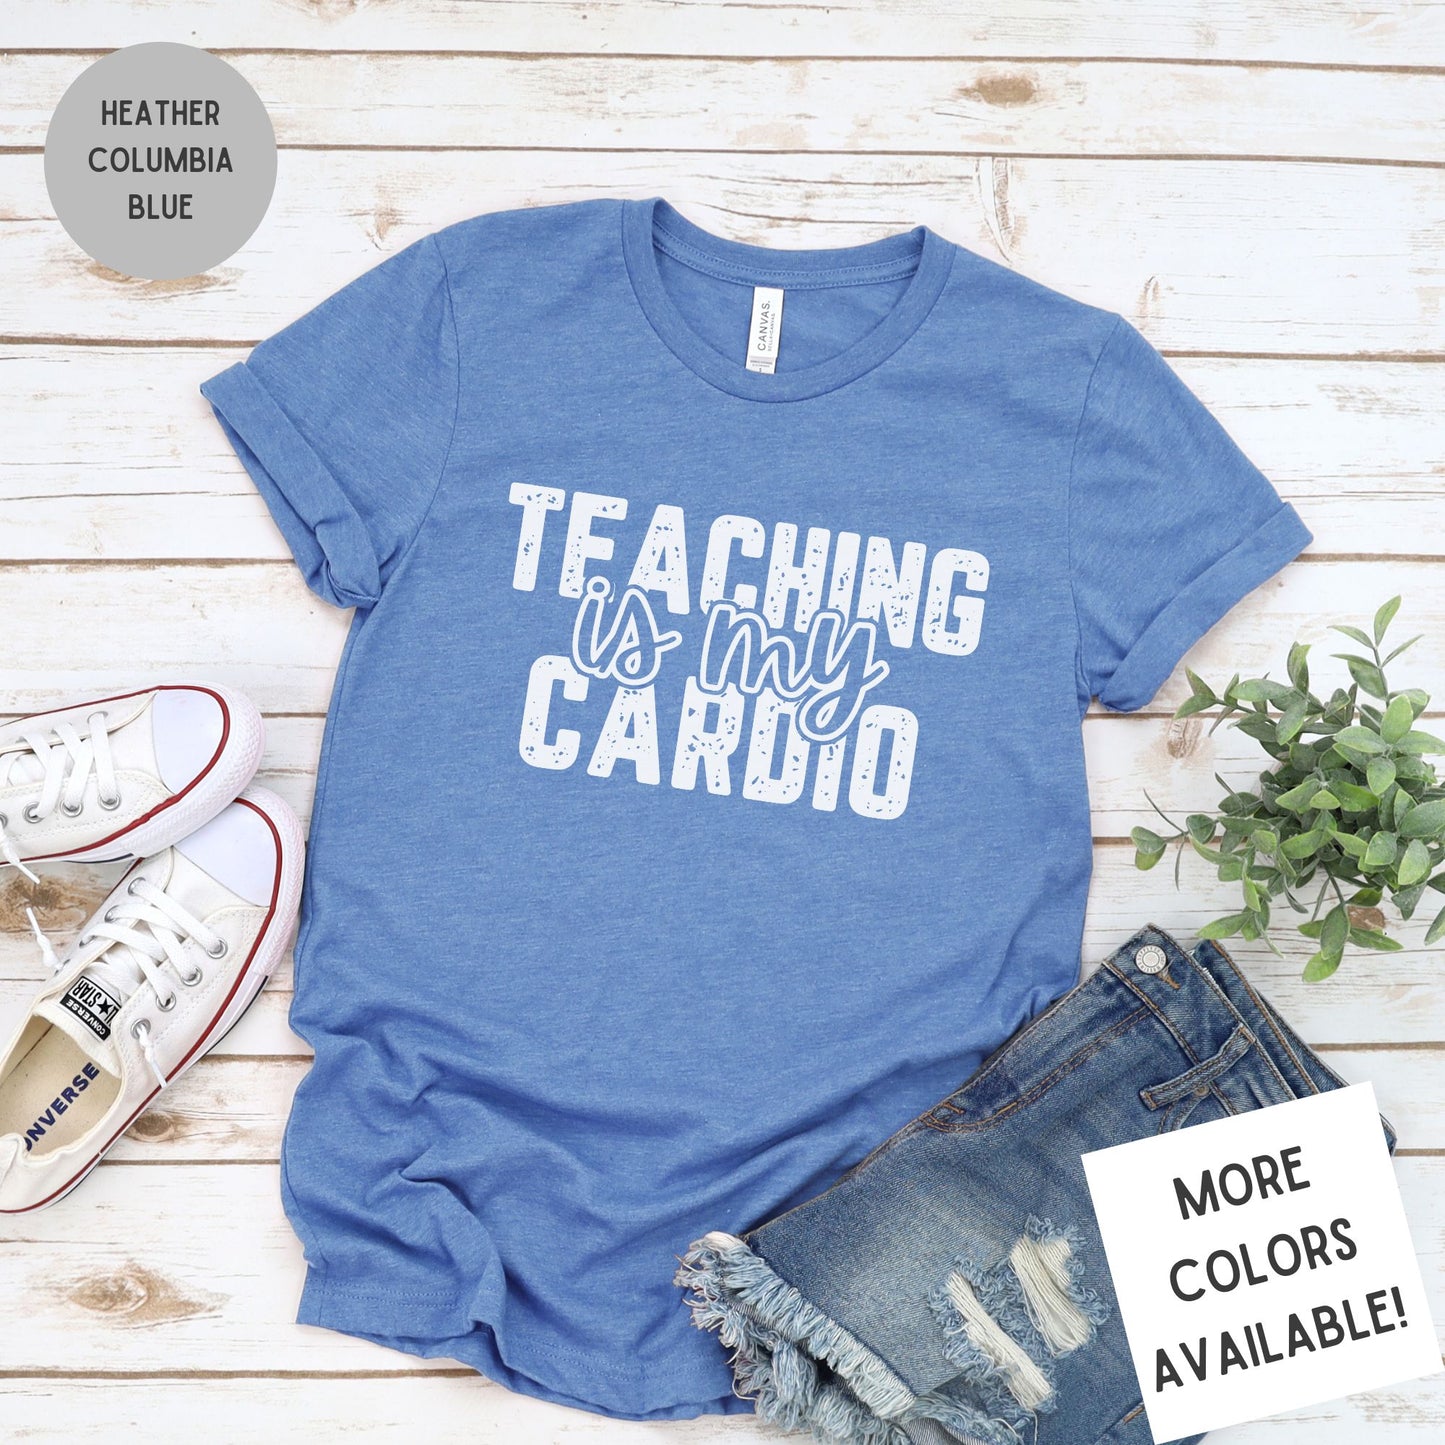 Teaching Is My Cardio Tee | Funny Teacher Graphic T-Shirt